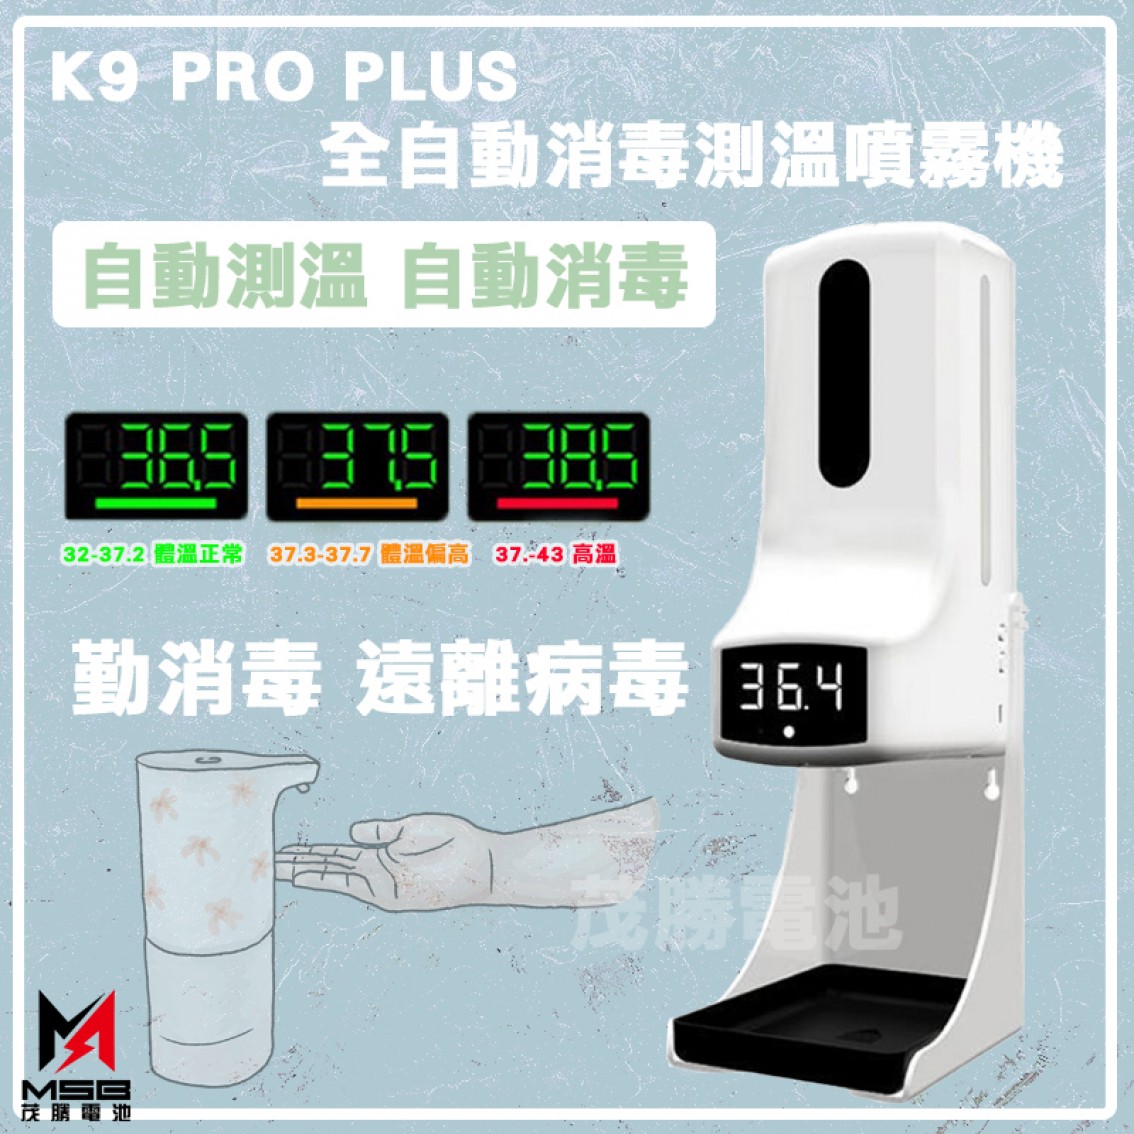 K9 PRO PLUS 全自動消毒測溫噴霧機